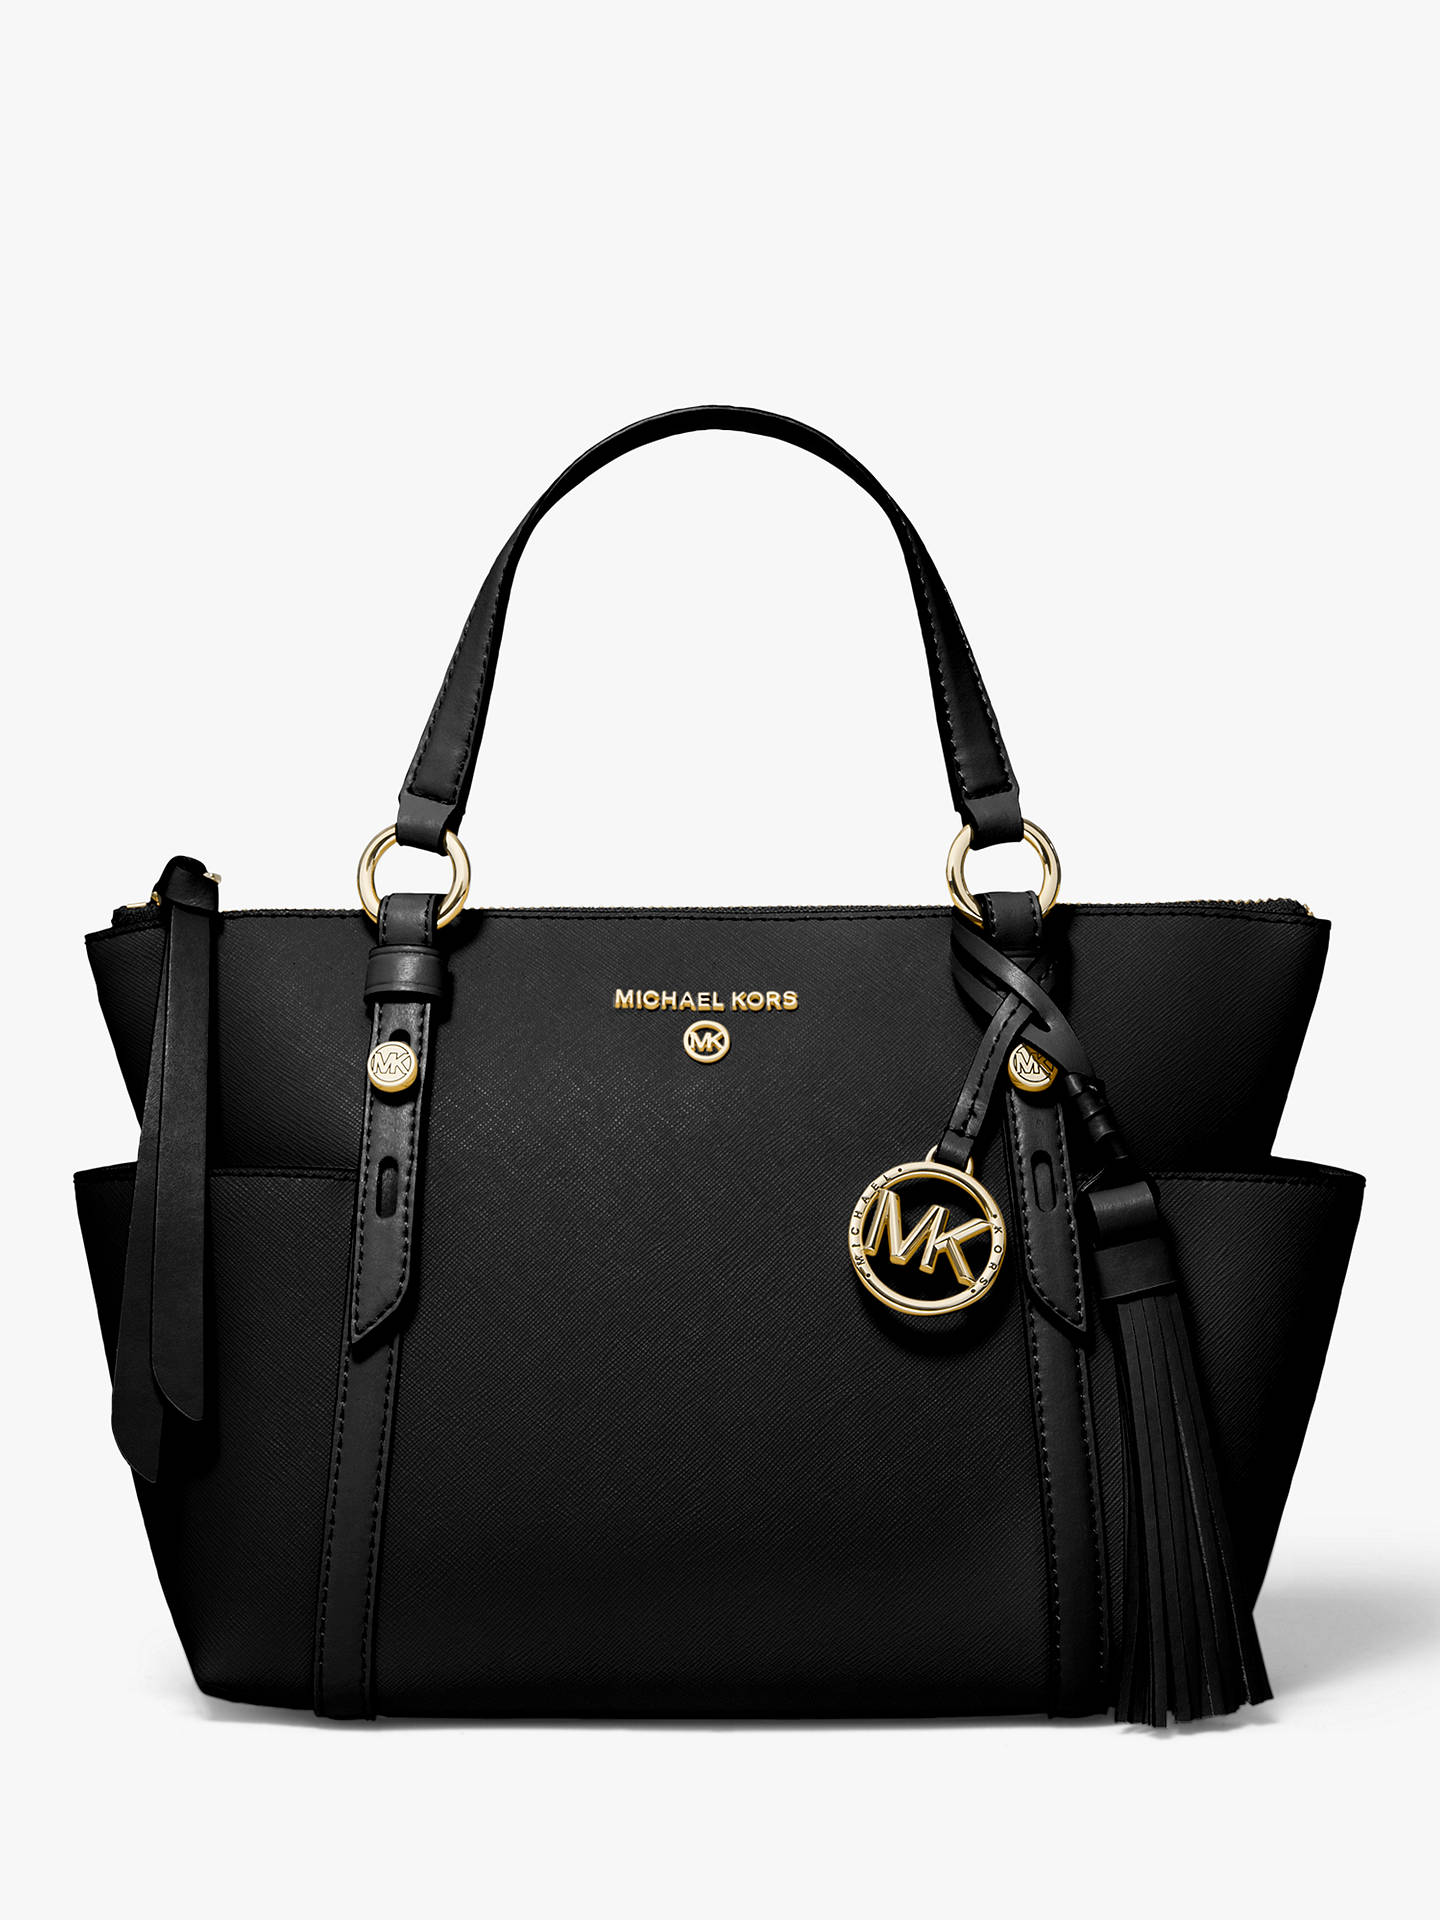 Michael Kors Handbags Women | semashow.com